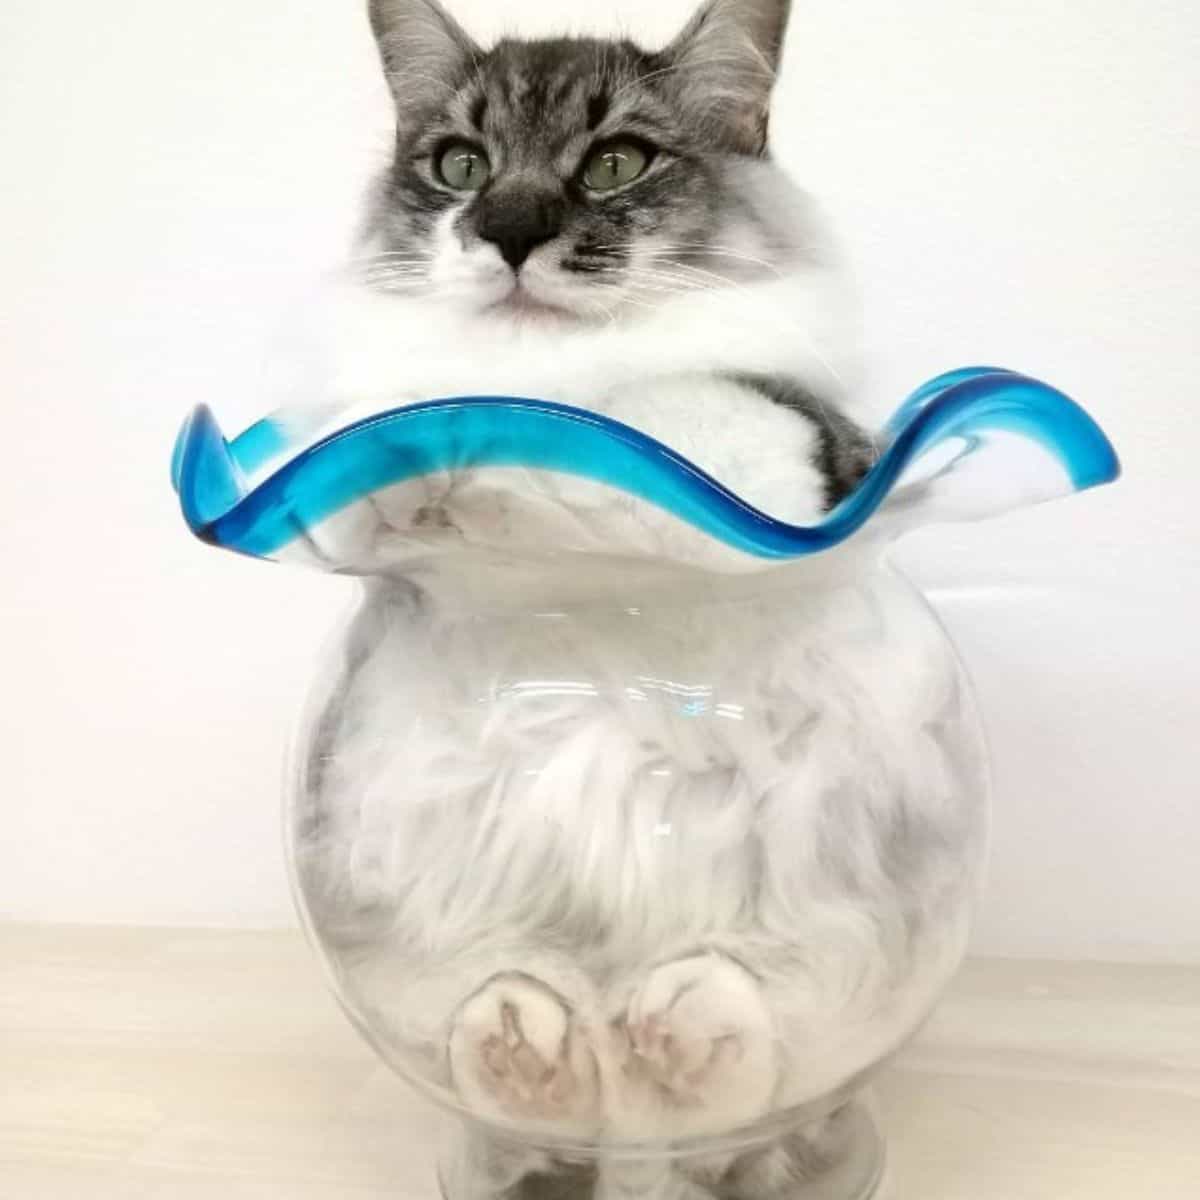 cat in a glass vase